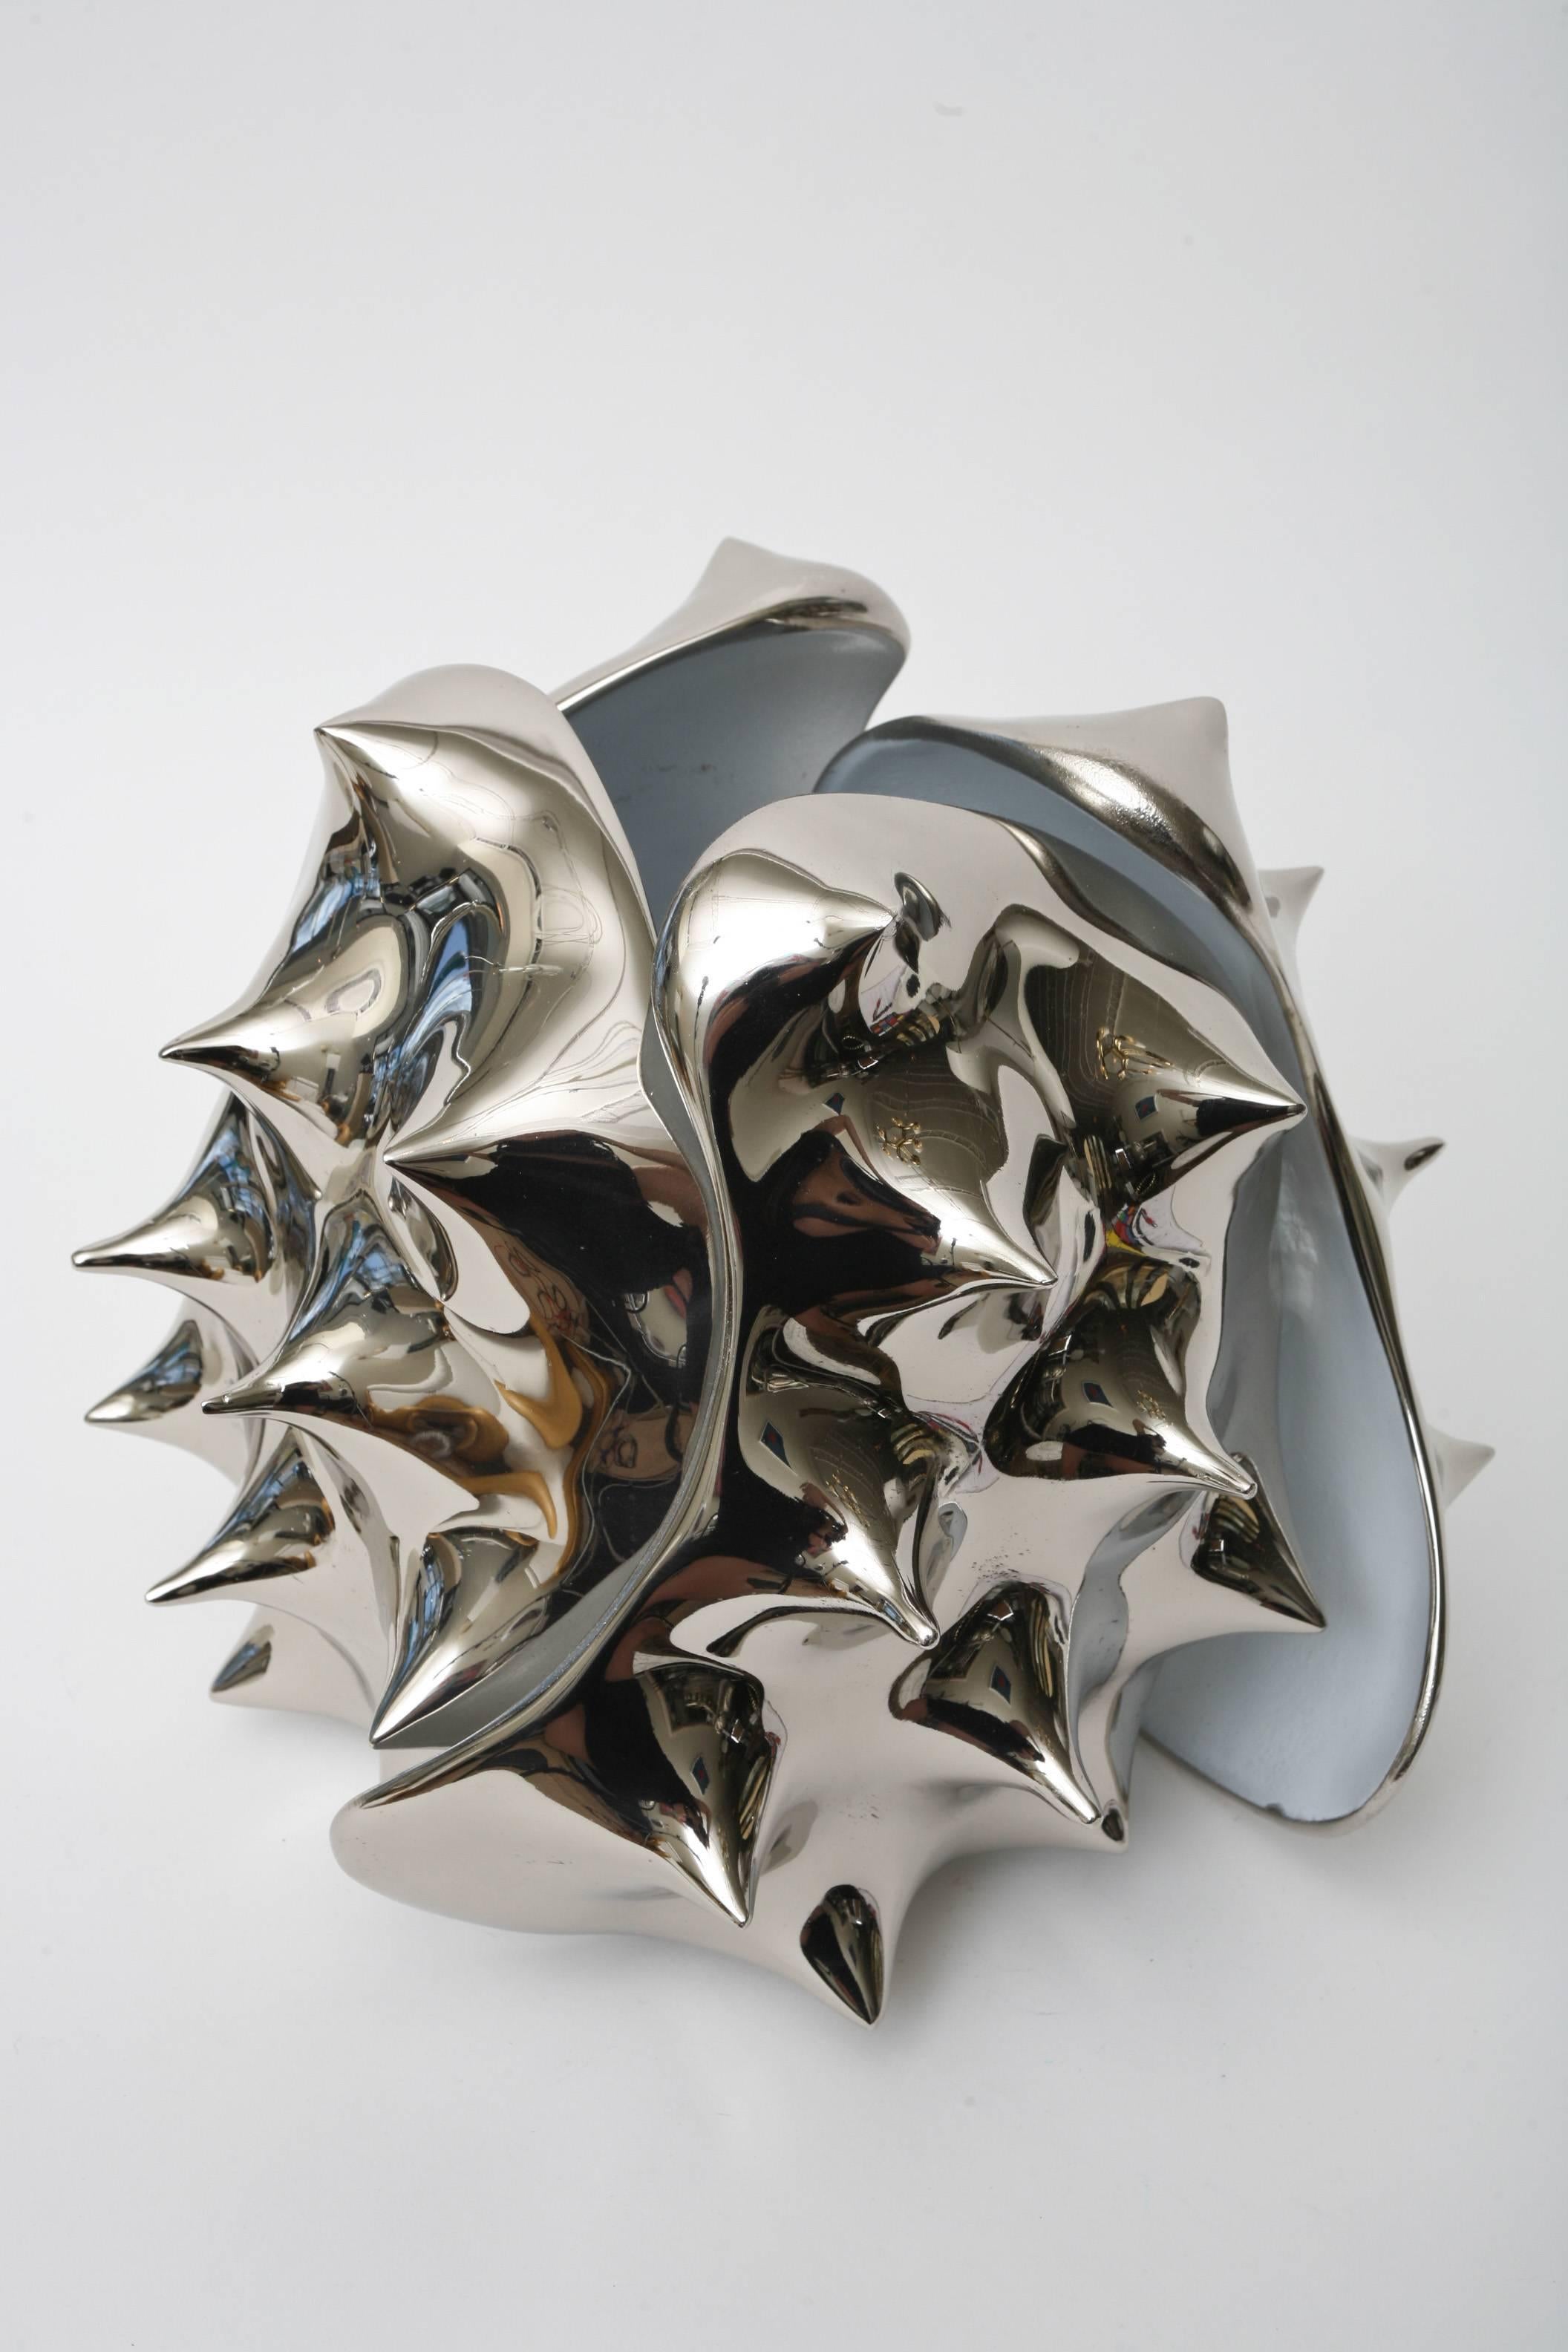 Organic Modern Sculptural Nickel Silver Table Lamp